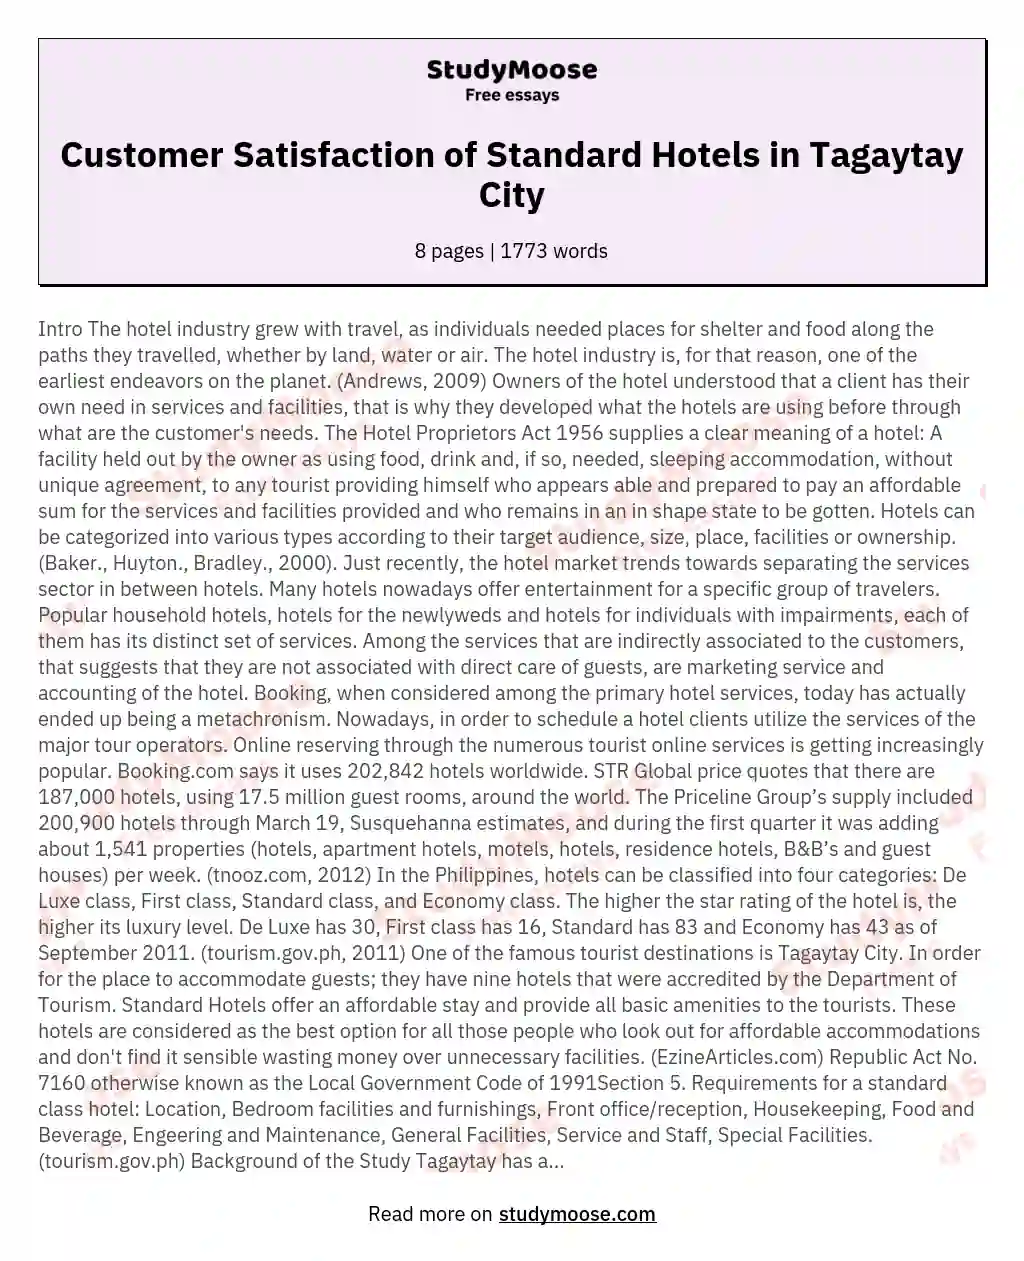 Customer Satisfaction of Standard Hotels in Tagaytay City essay